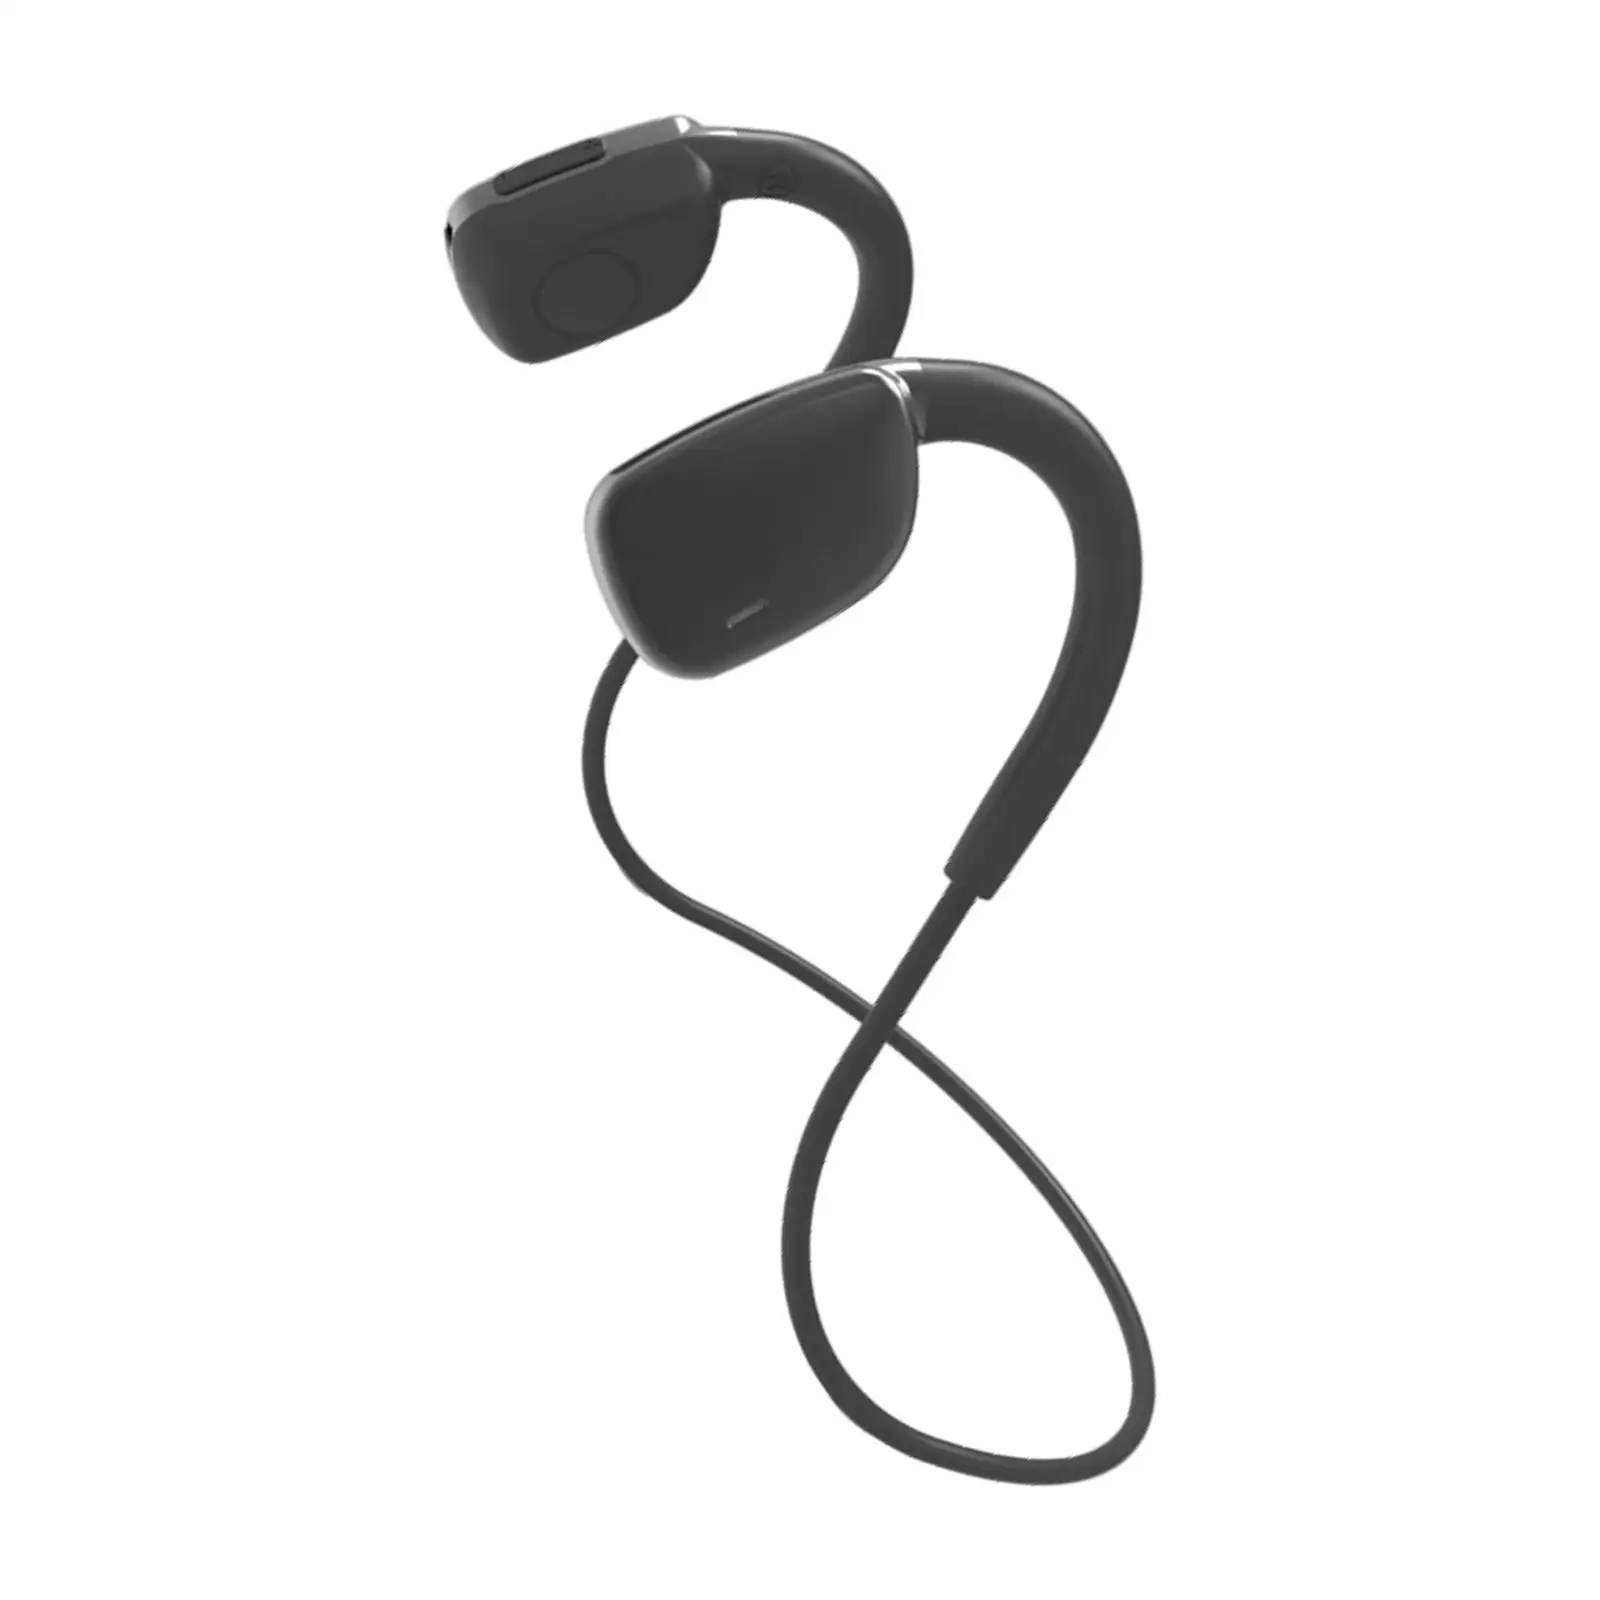 Wireless Bluetooth 5.0 Headphones Hands Free Waterproof Sweatproof Double Ears Sports Earphone for Drivers Cycling Workout Gym